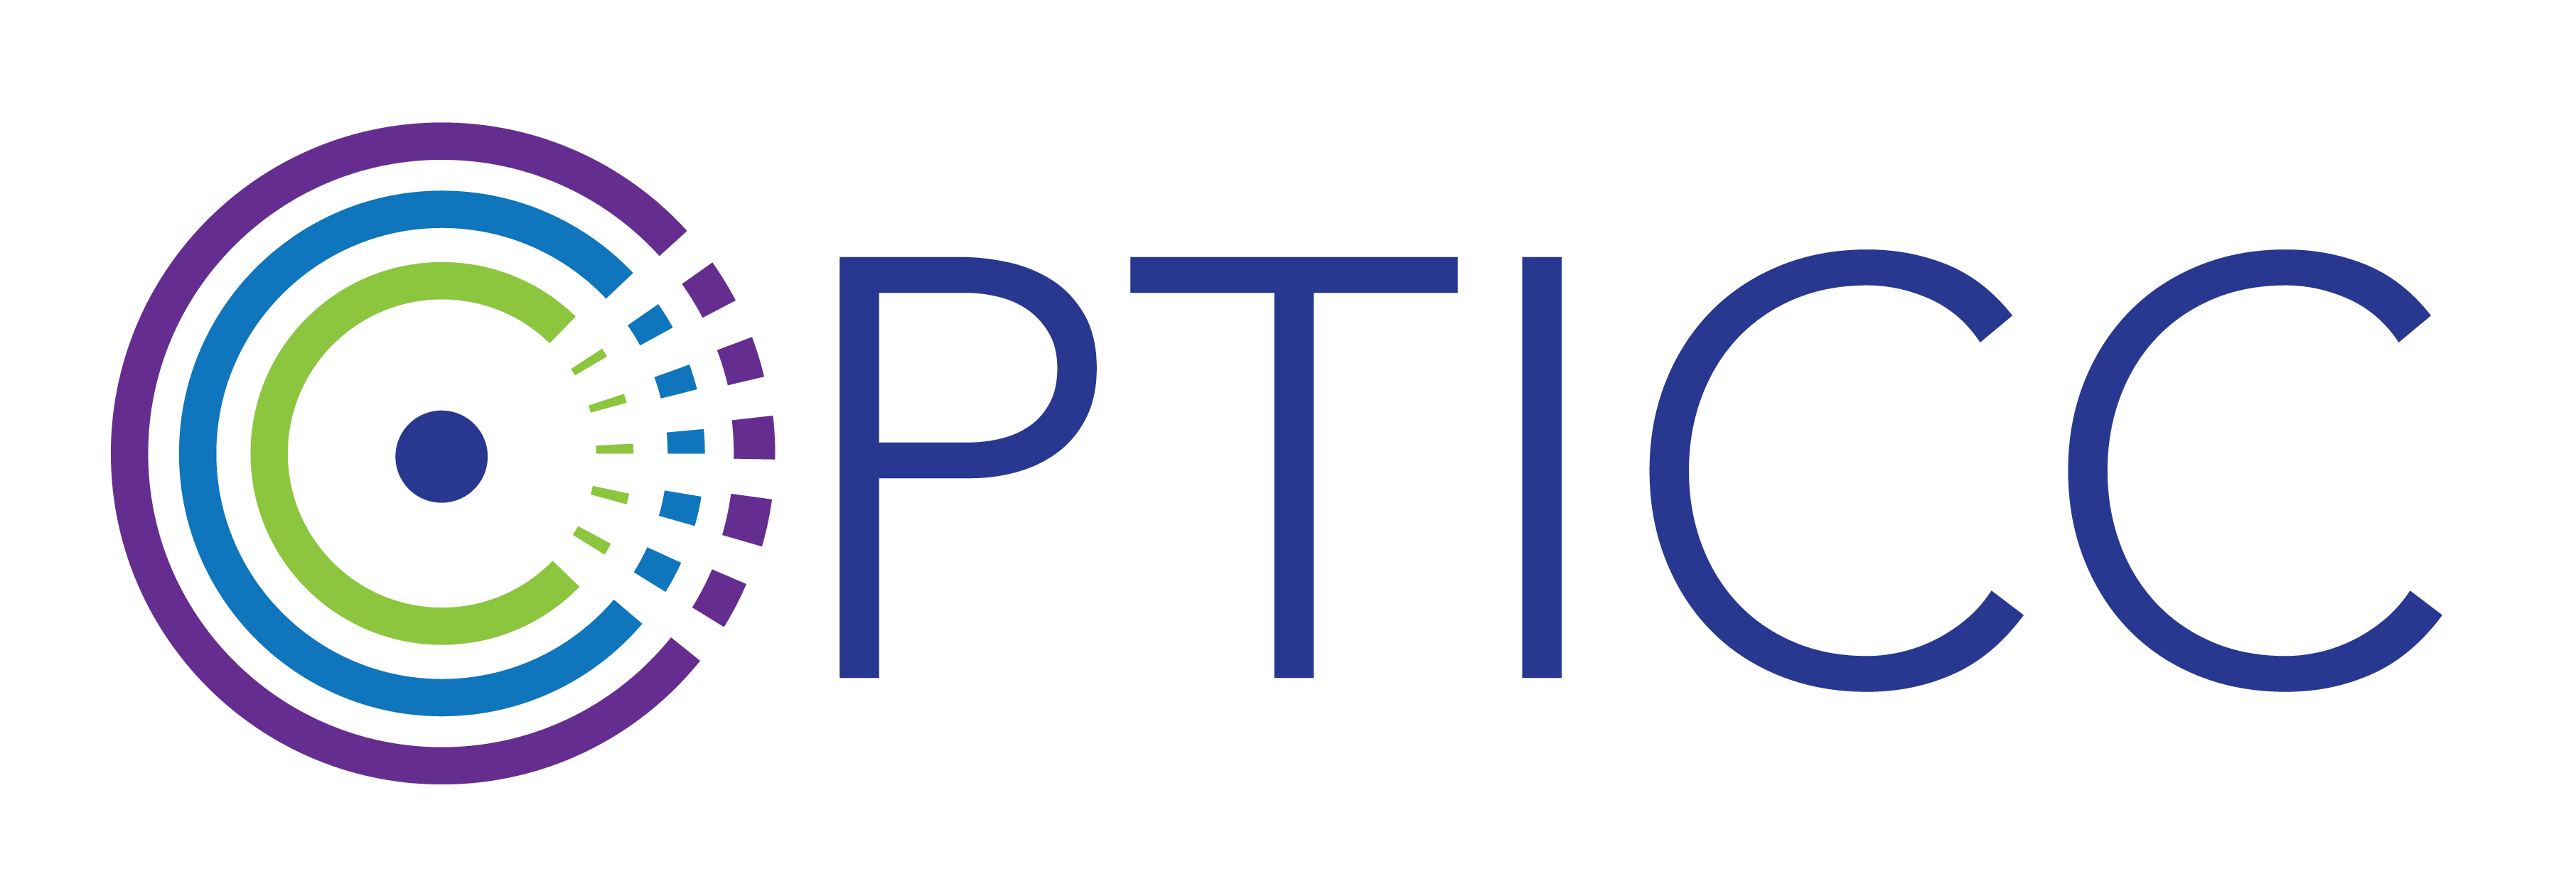 OPTICC four color logo